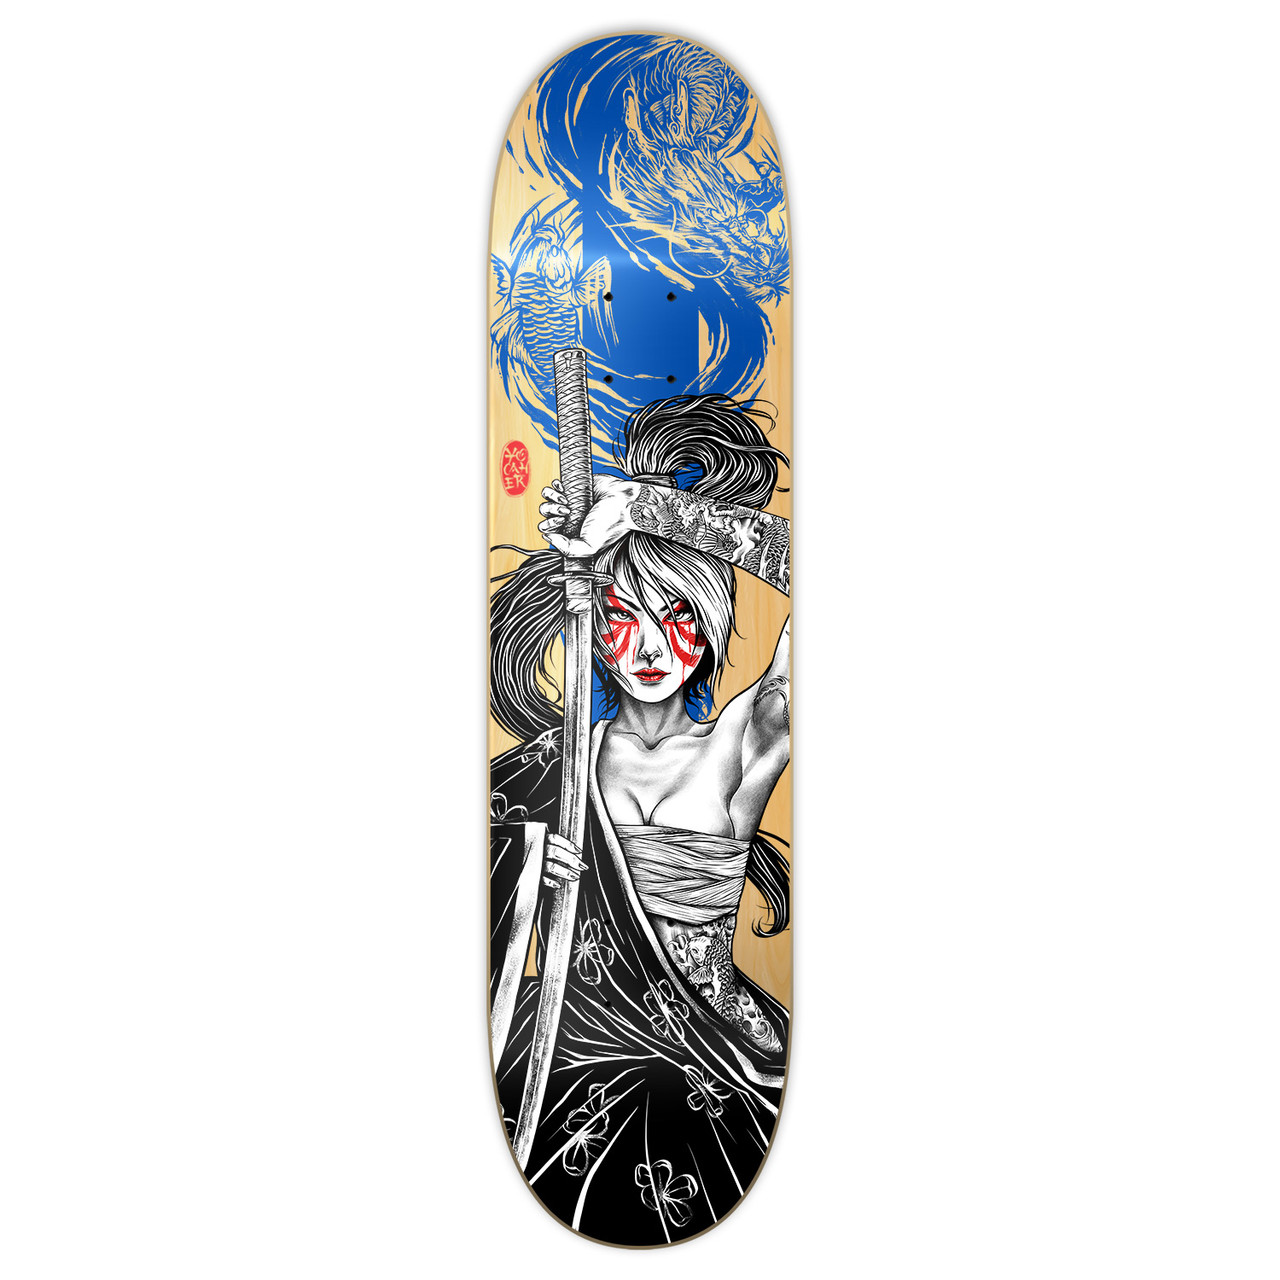 Yocaher Graphic Skateboard Deck - Samurai Series - Girl Samurai